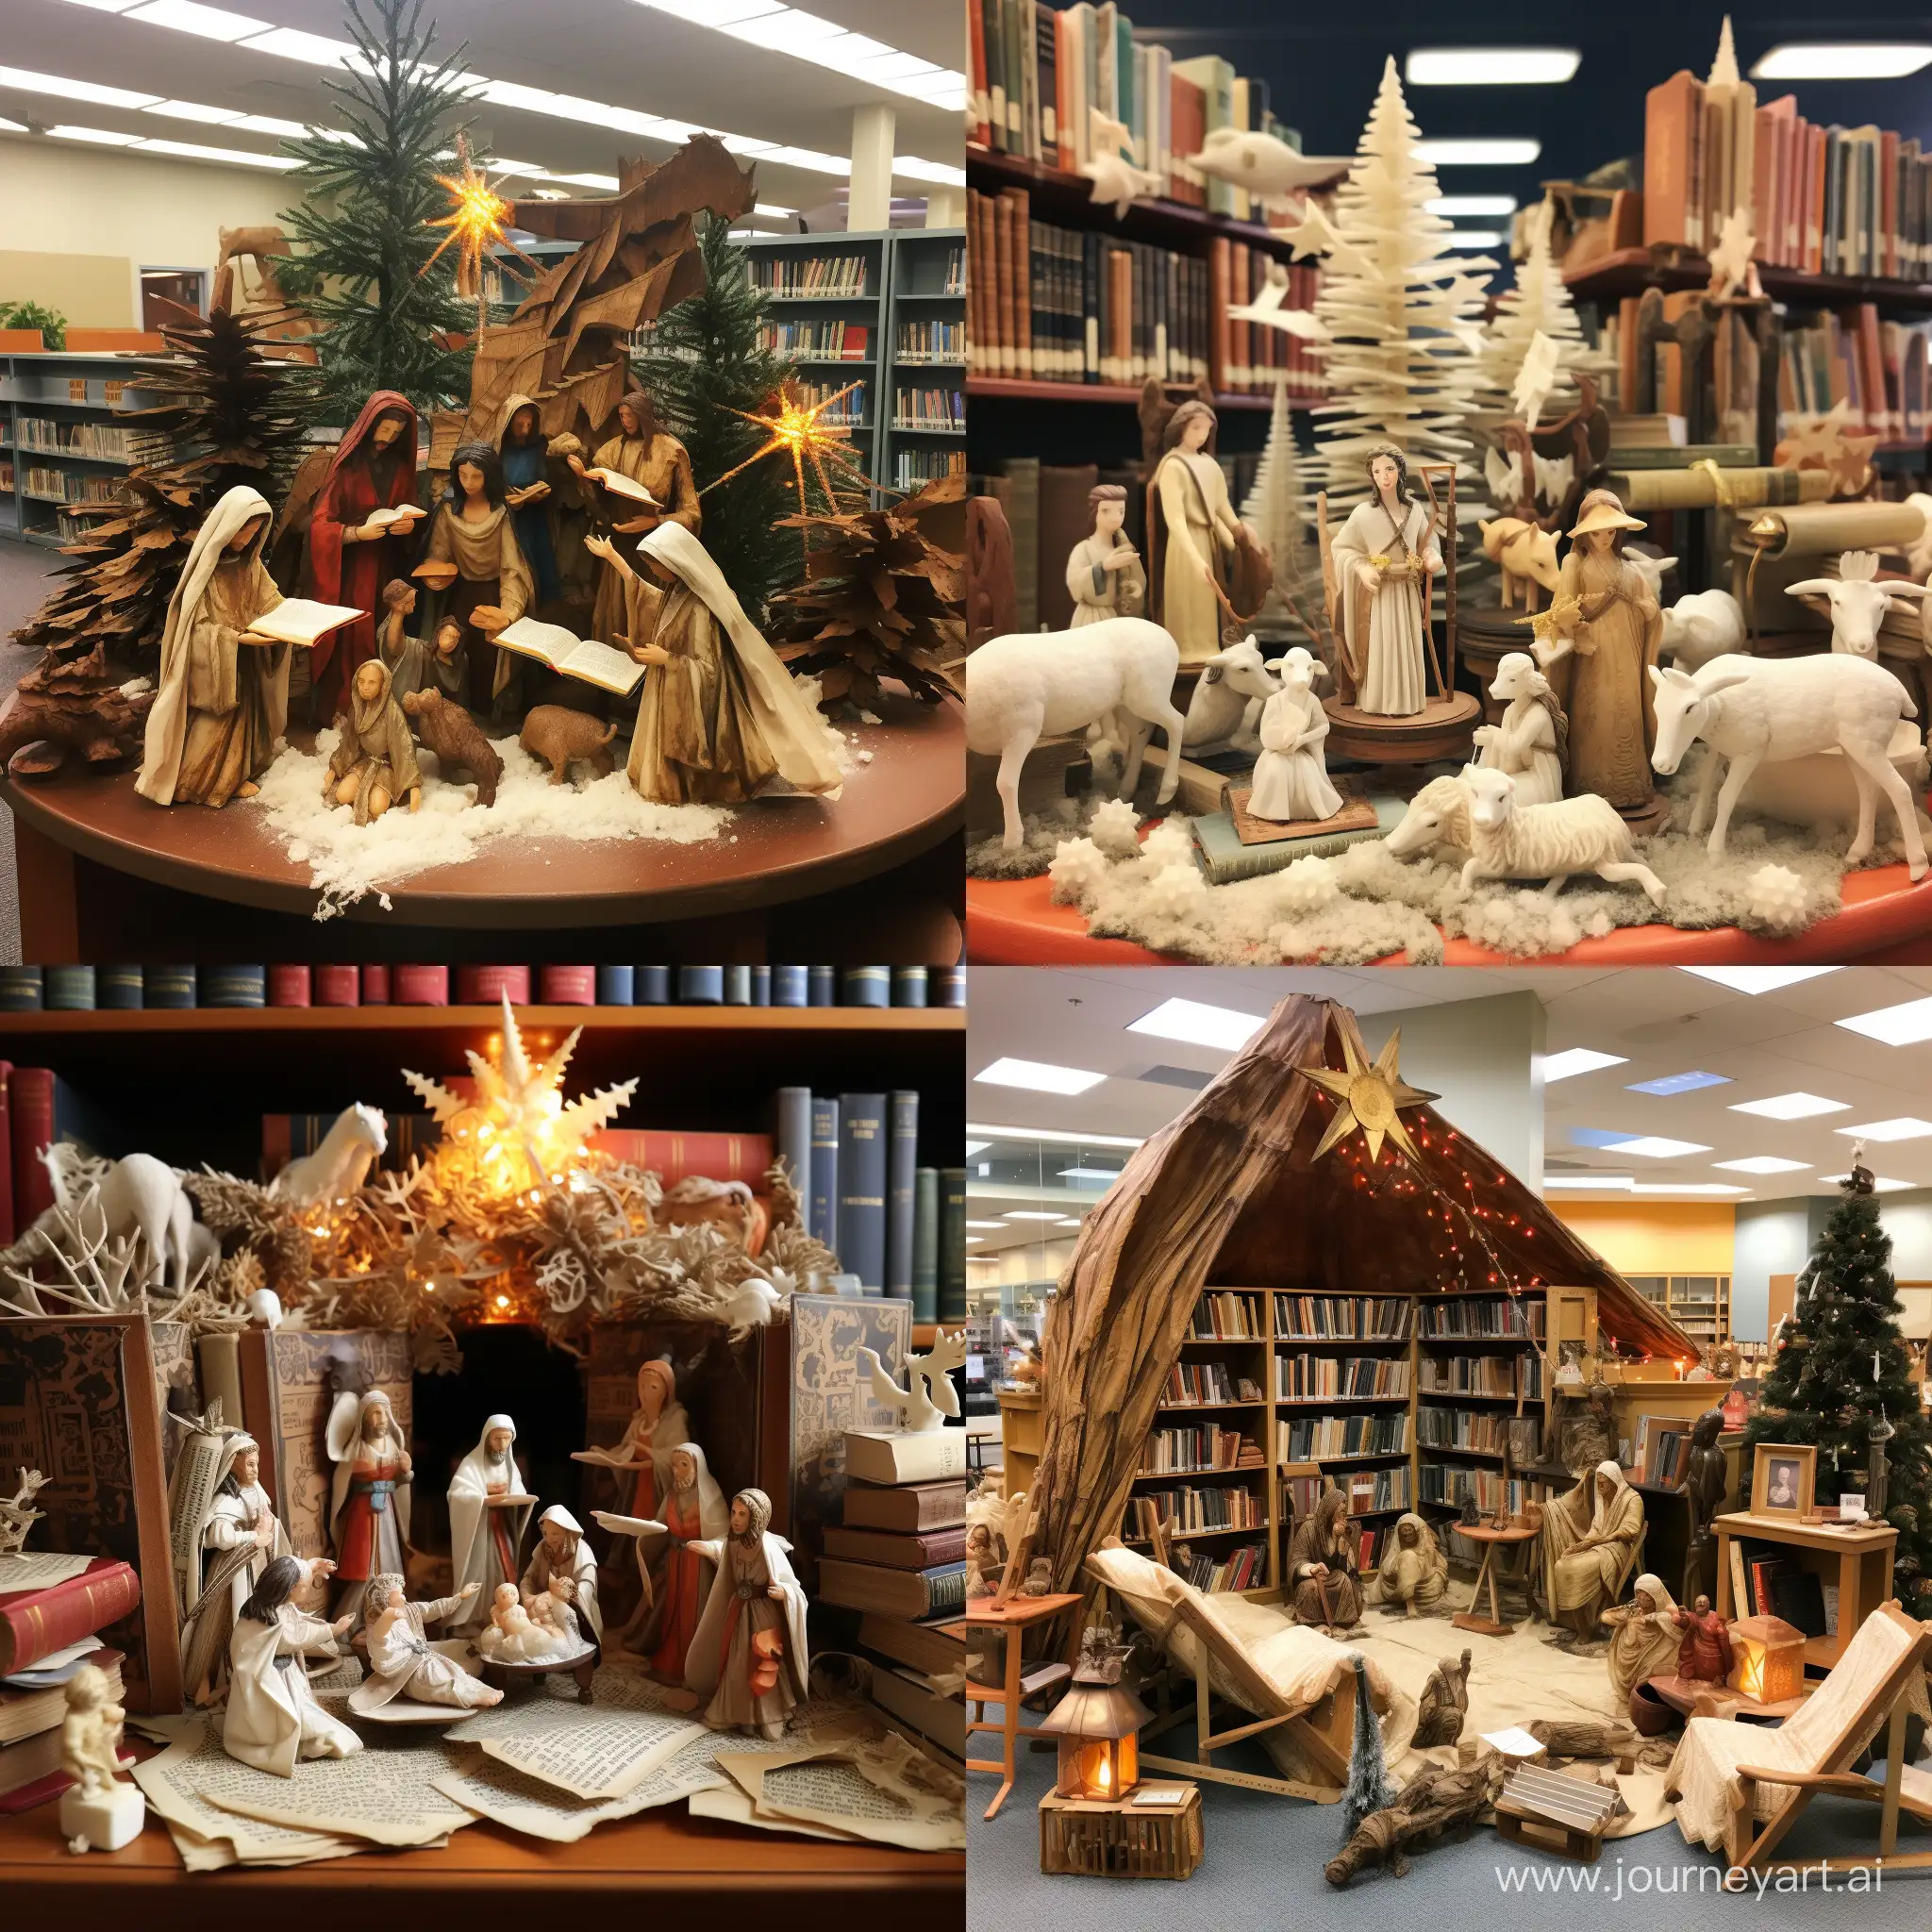 Festive-Christmas-Nativity-Scene-in-Library-Setting